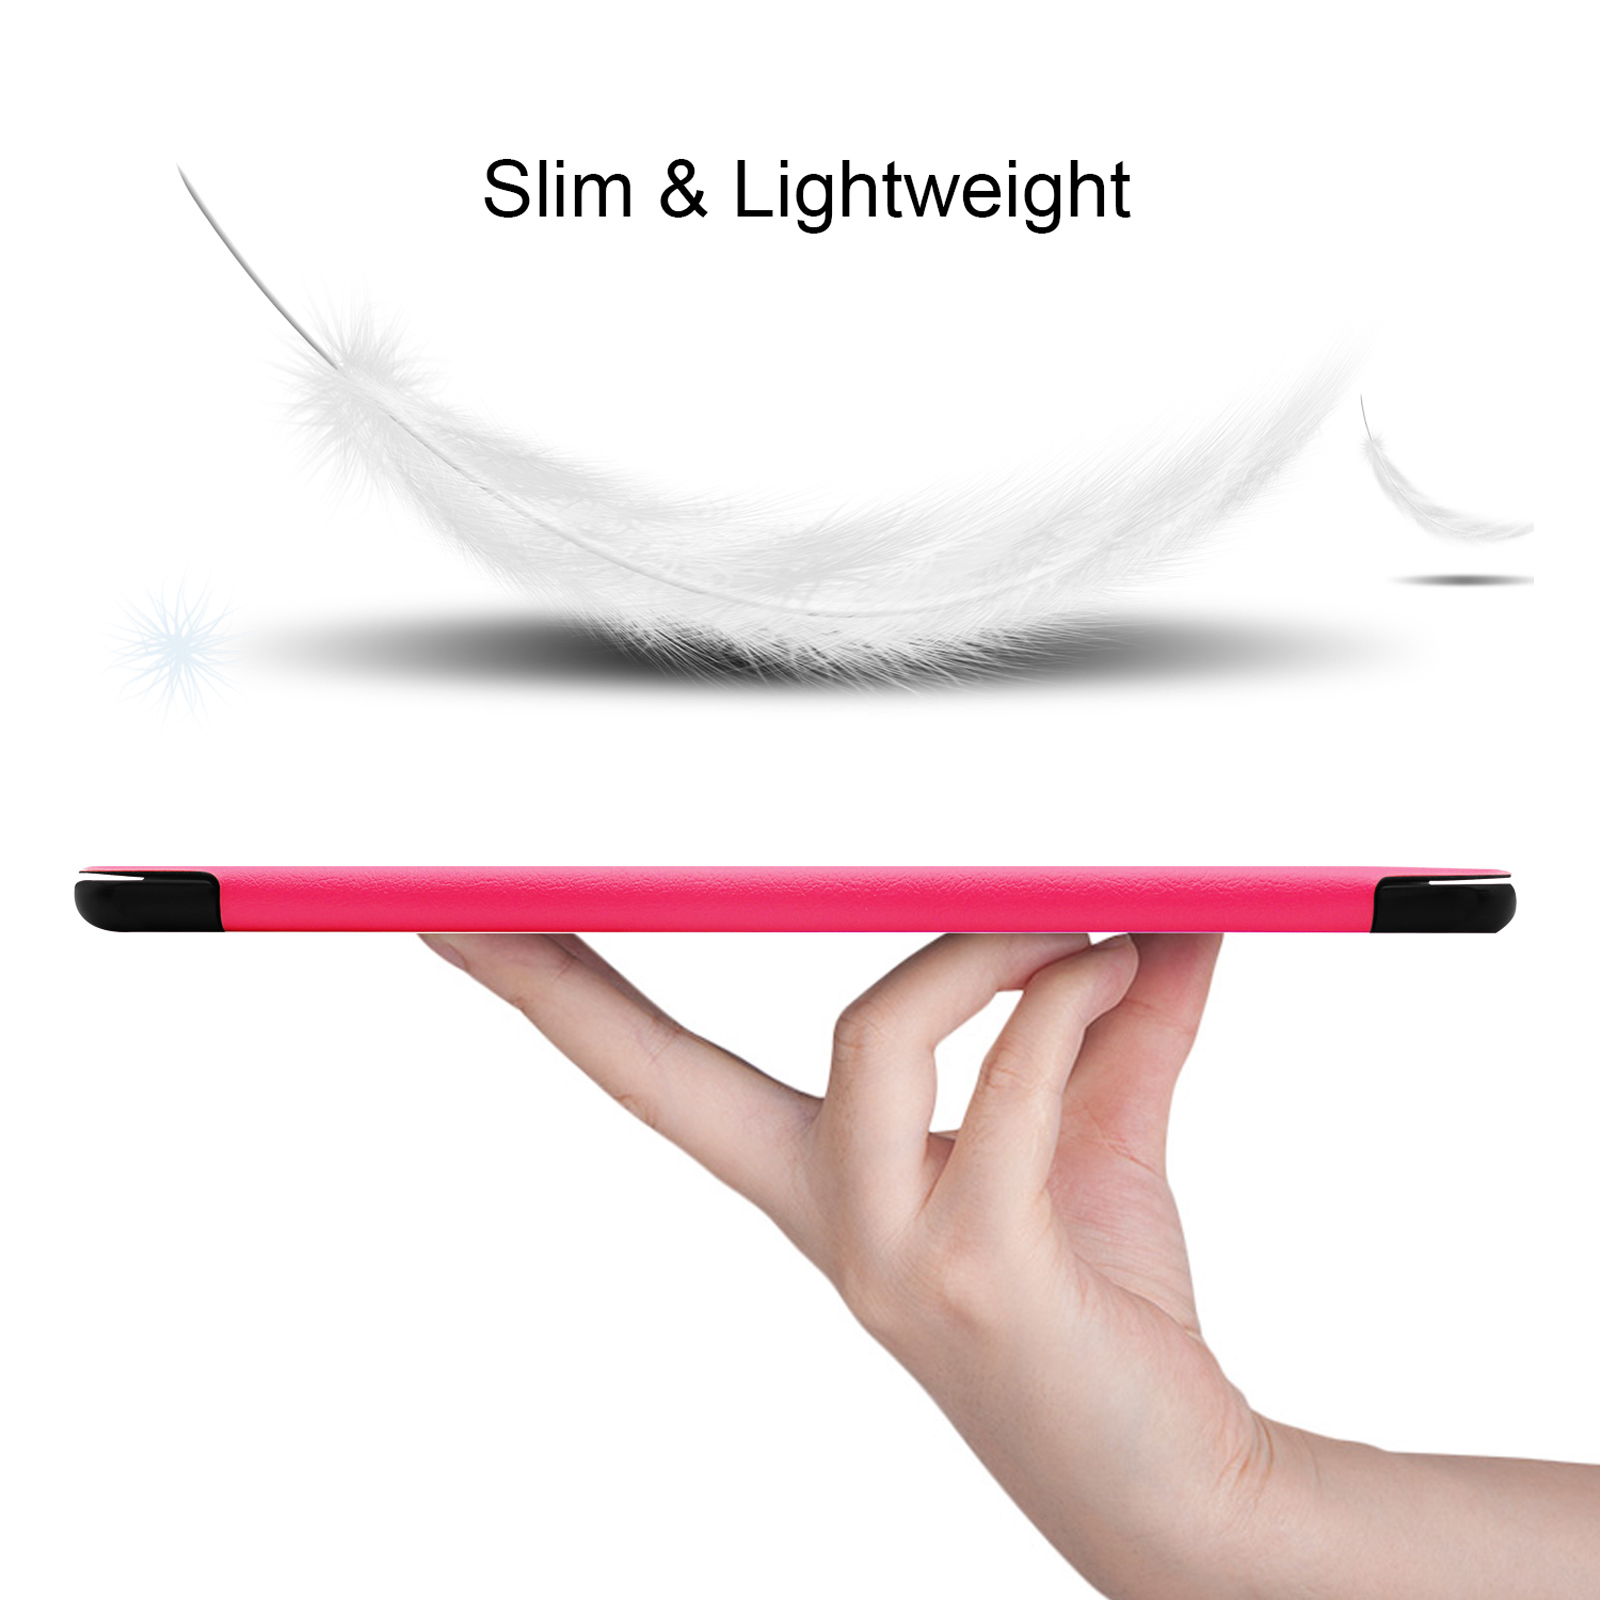 LOBWERK Hülle Pink 10.5 Schutzhülle S5e für Kunstleder, SM-T720 Zoll T725 Tab Bookcover Galaxy Samsung